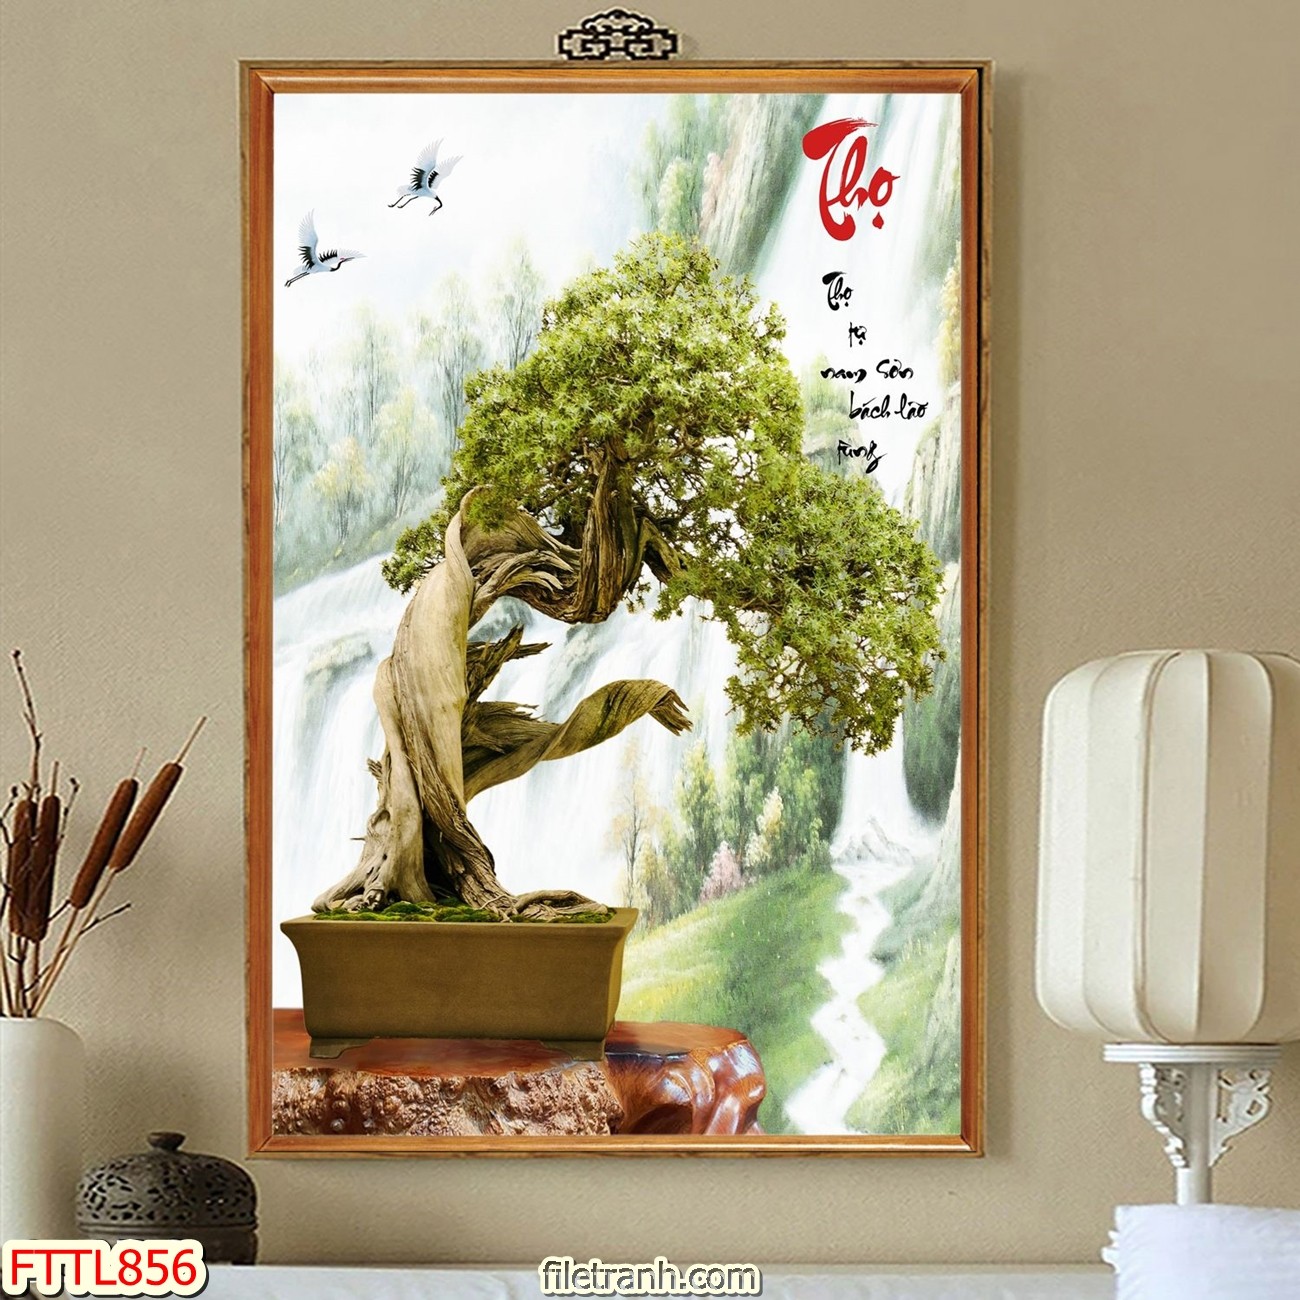 https://filetranh.com/file-tranh-chau-mai-bonsai/file-tranh-chau-mai-bonsai-fttl856.html